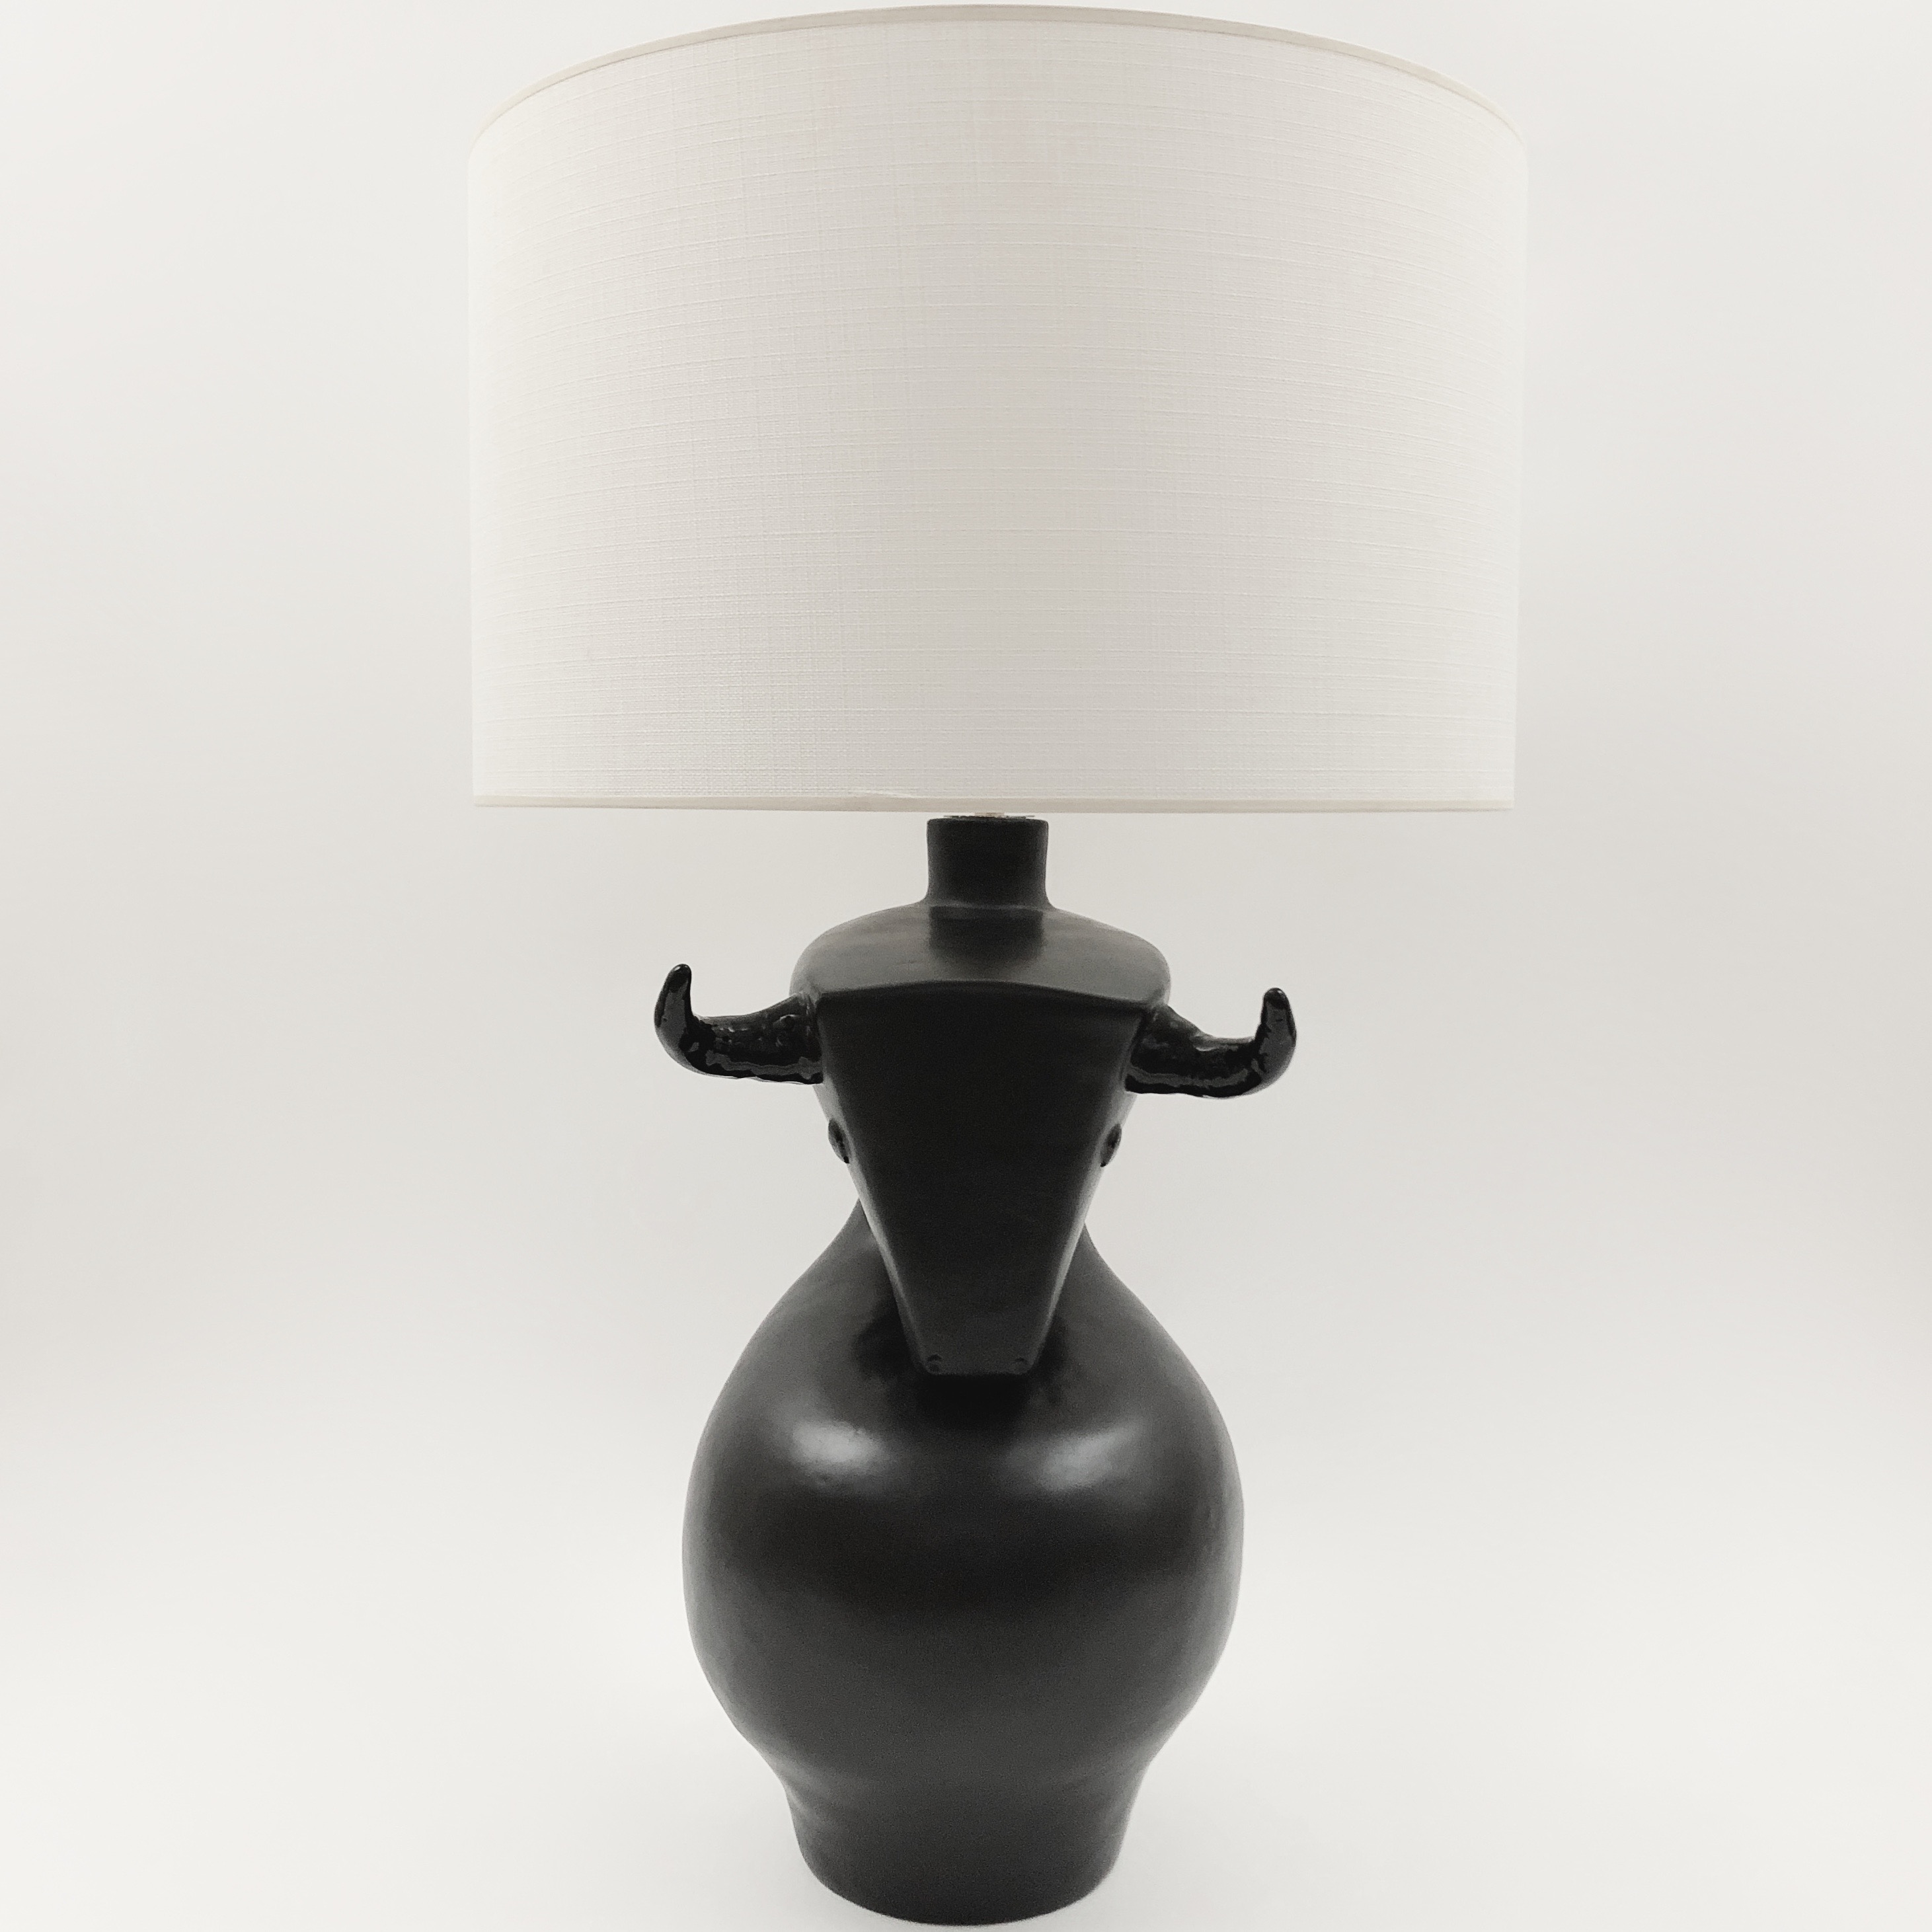 DaLo - Ceramic Table Lamp, Black Bull Shaped